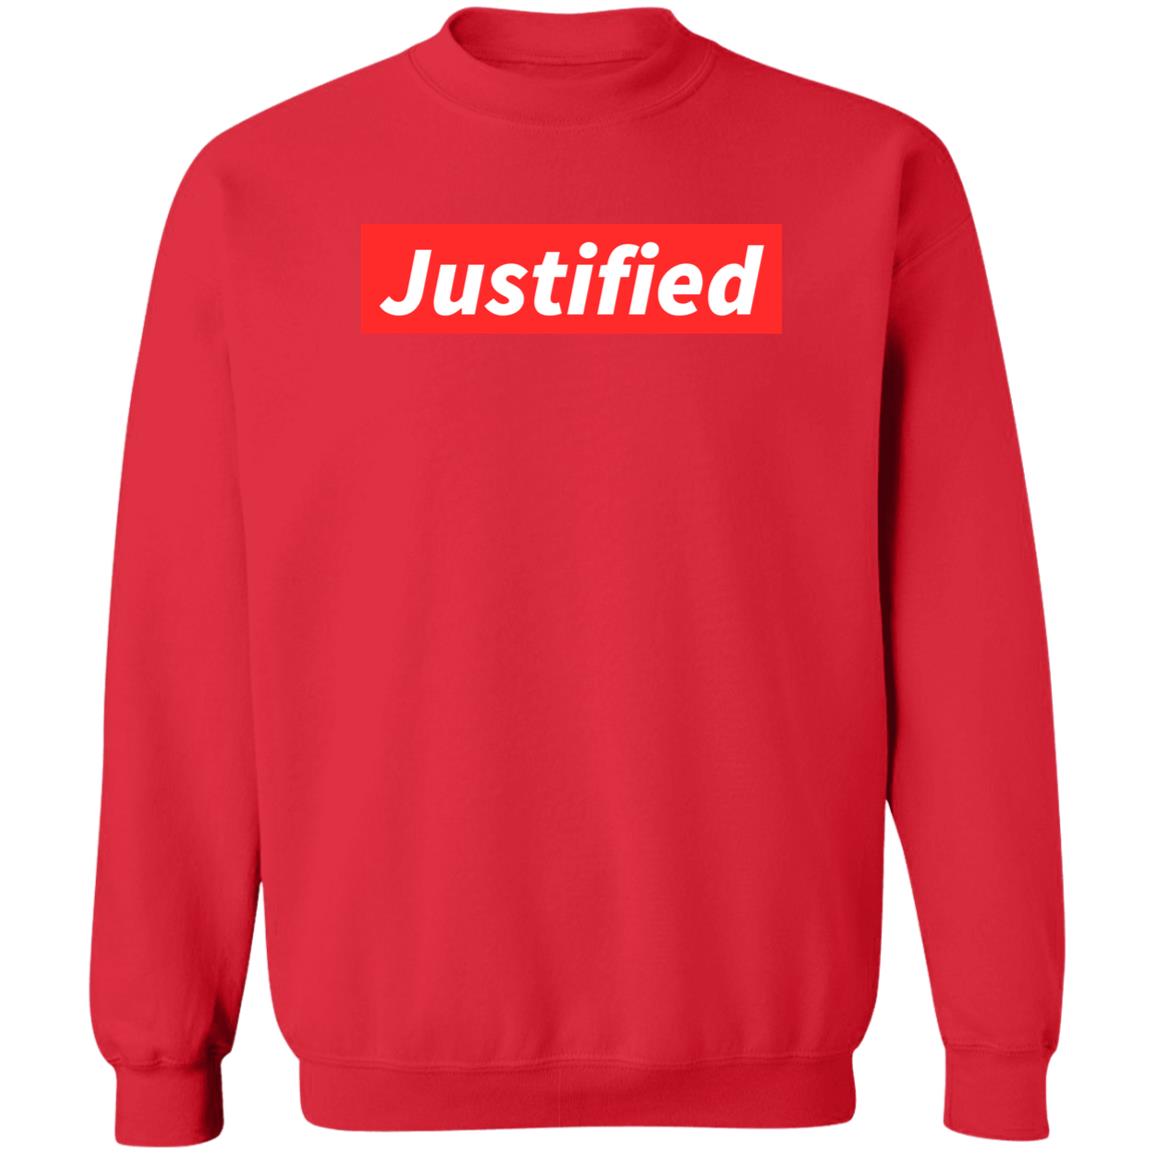 Justified (Unisex Sweatshirt)